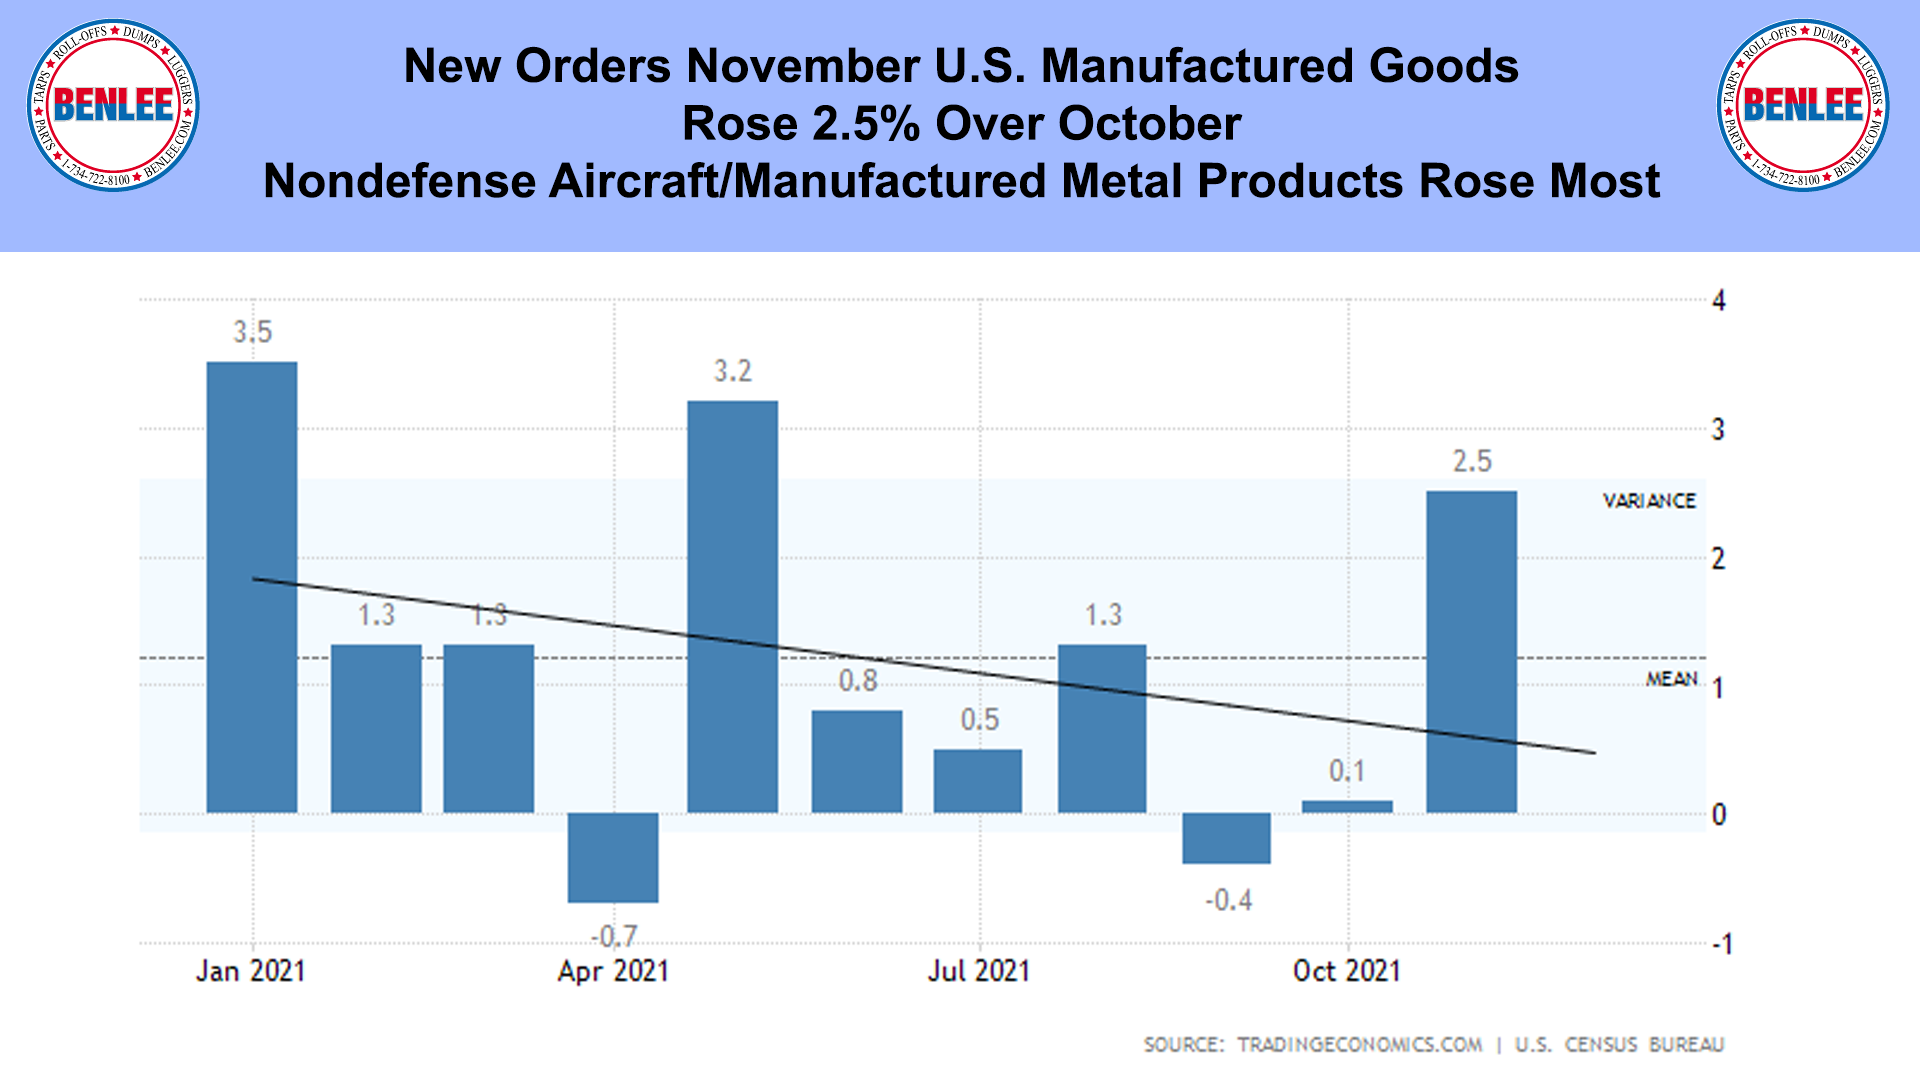 New Orders November U.S. Manufactured Goods